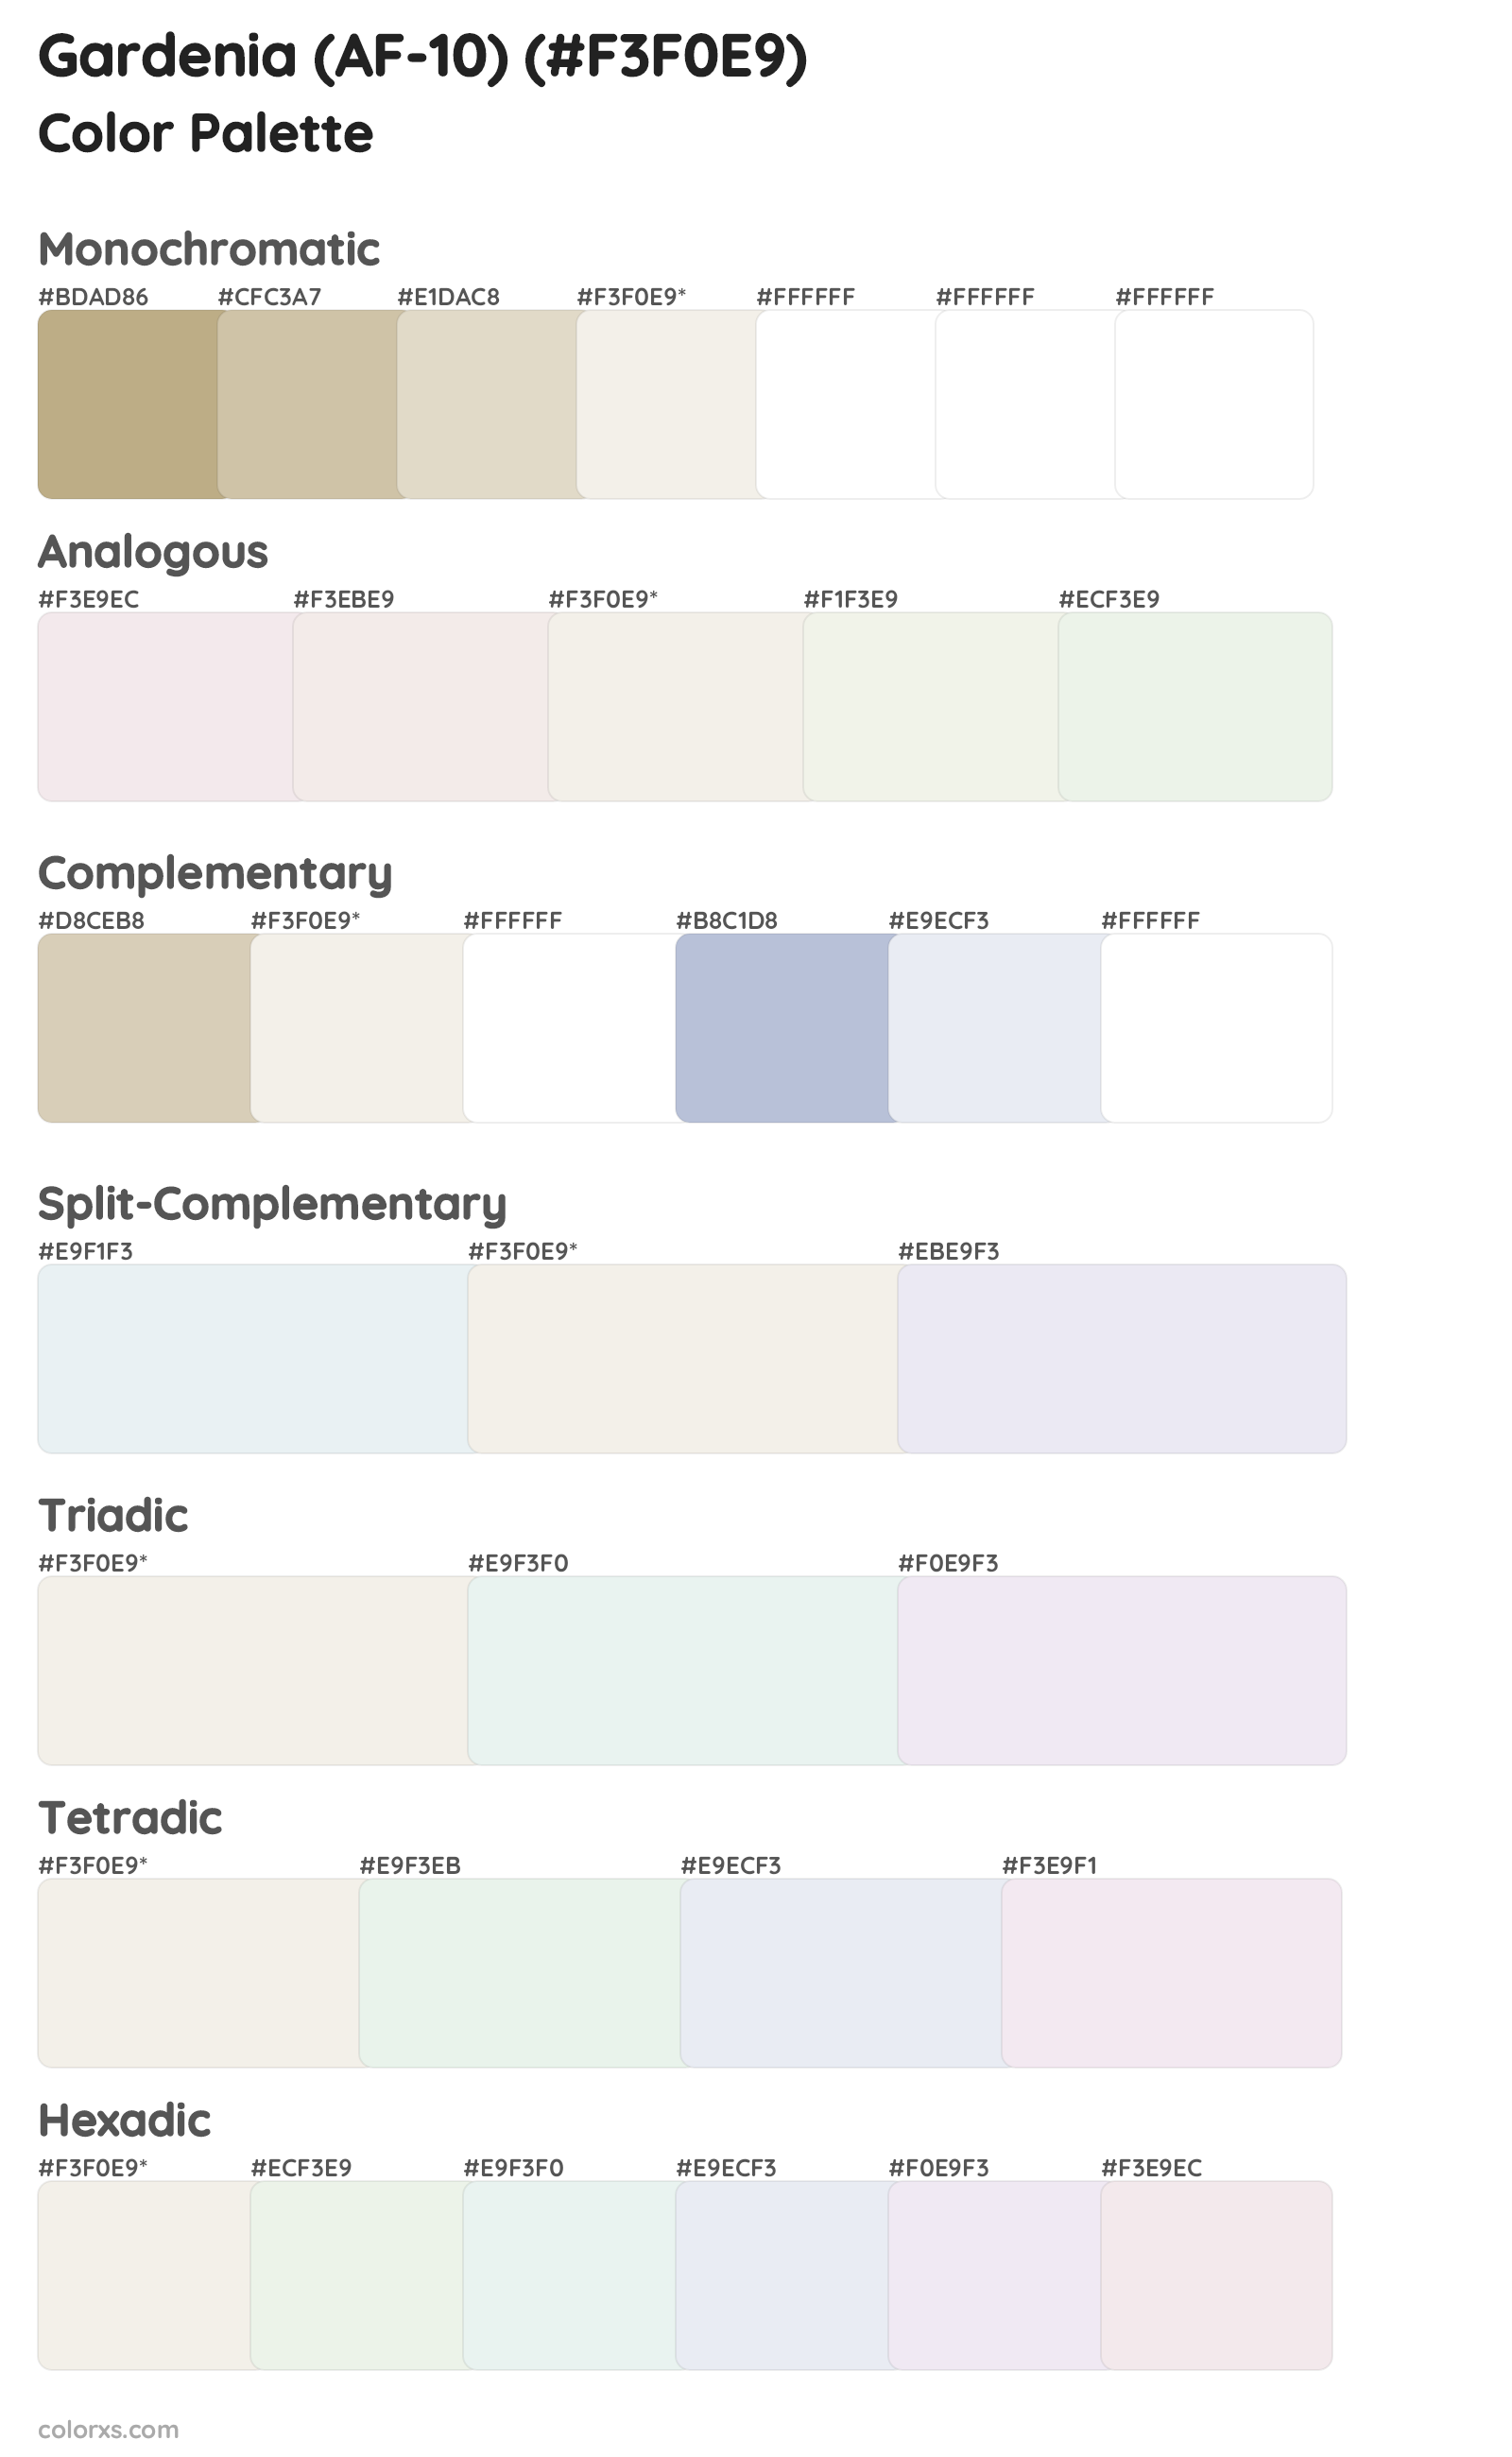 Gardenia (AF-10) Color Scheme Palettes